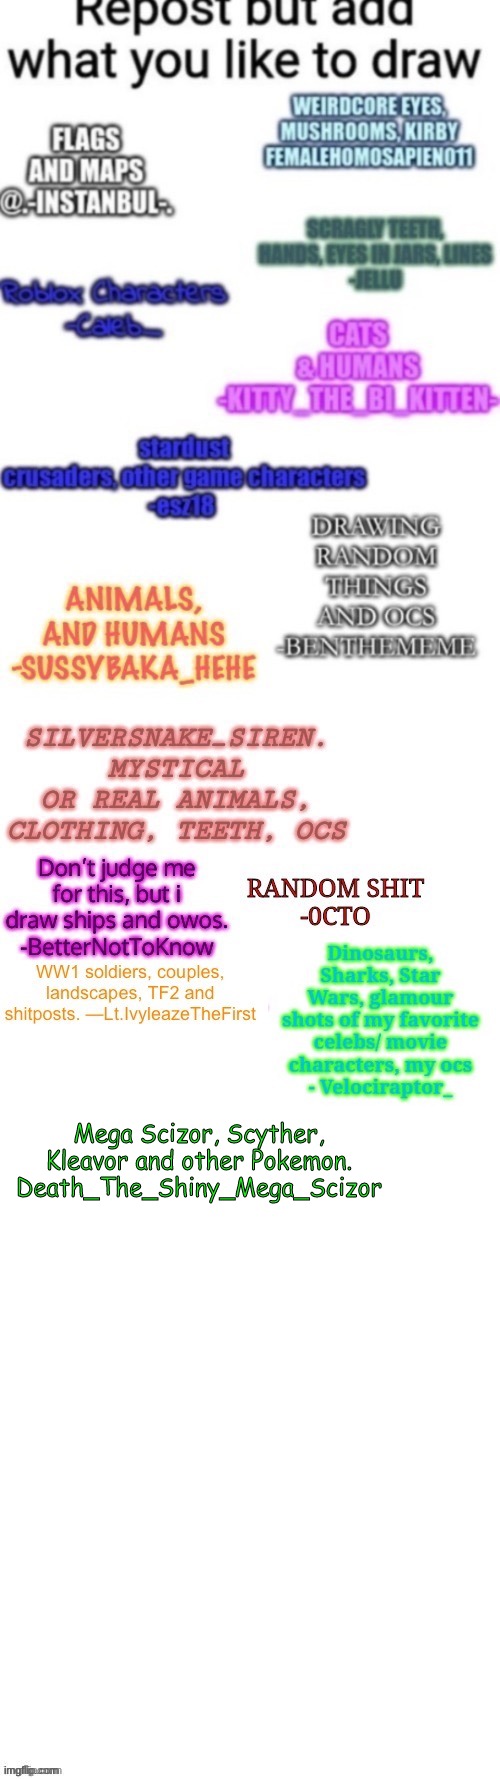 Mega Scizor, Scyther, Kleavor and other Pokemon.
Death_The_Shiny_Mega_Scizor | image tagged in pokemon,drawing | made w/ Imgflip meme maker